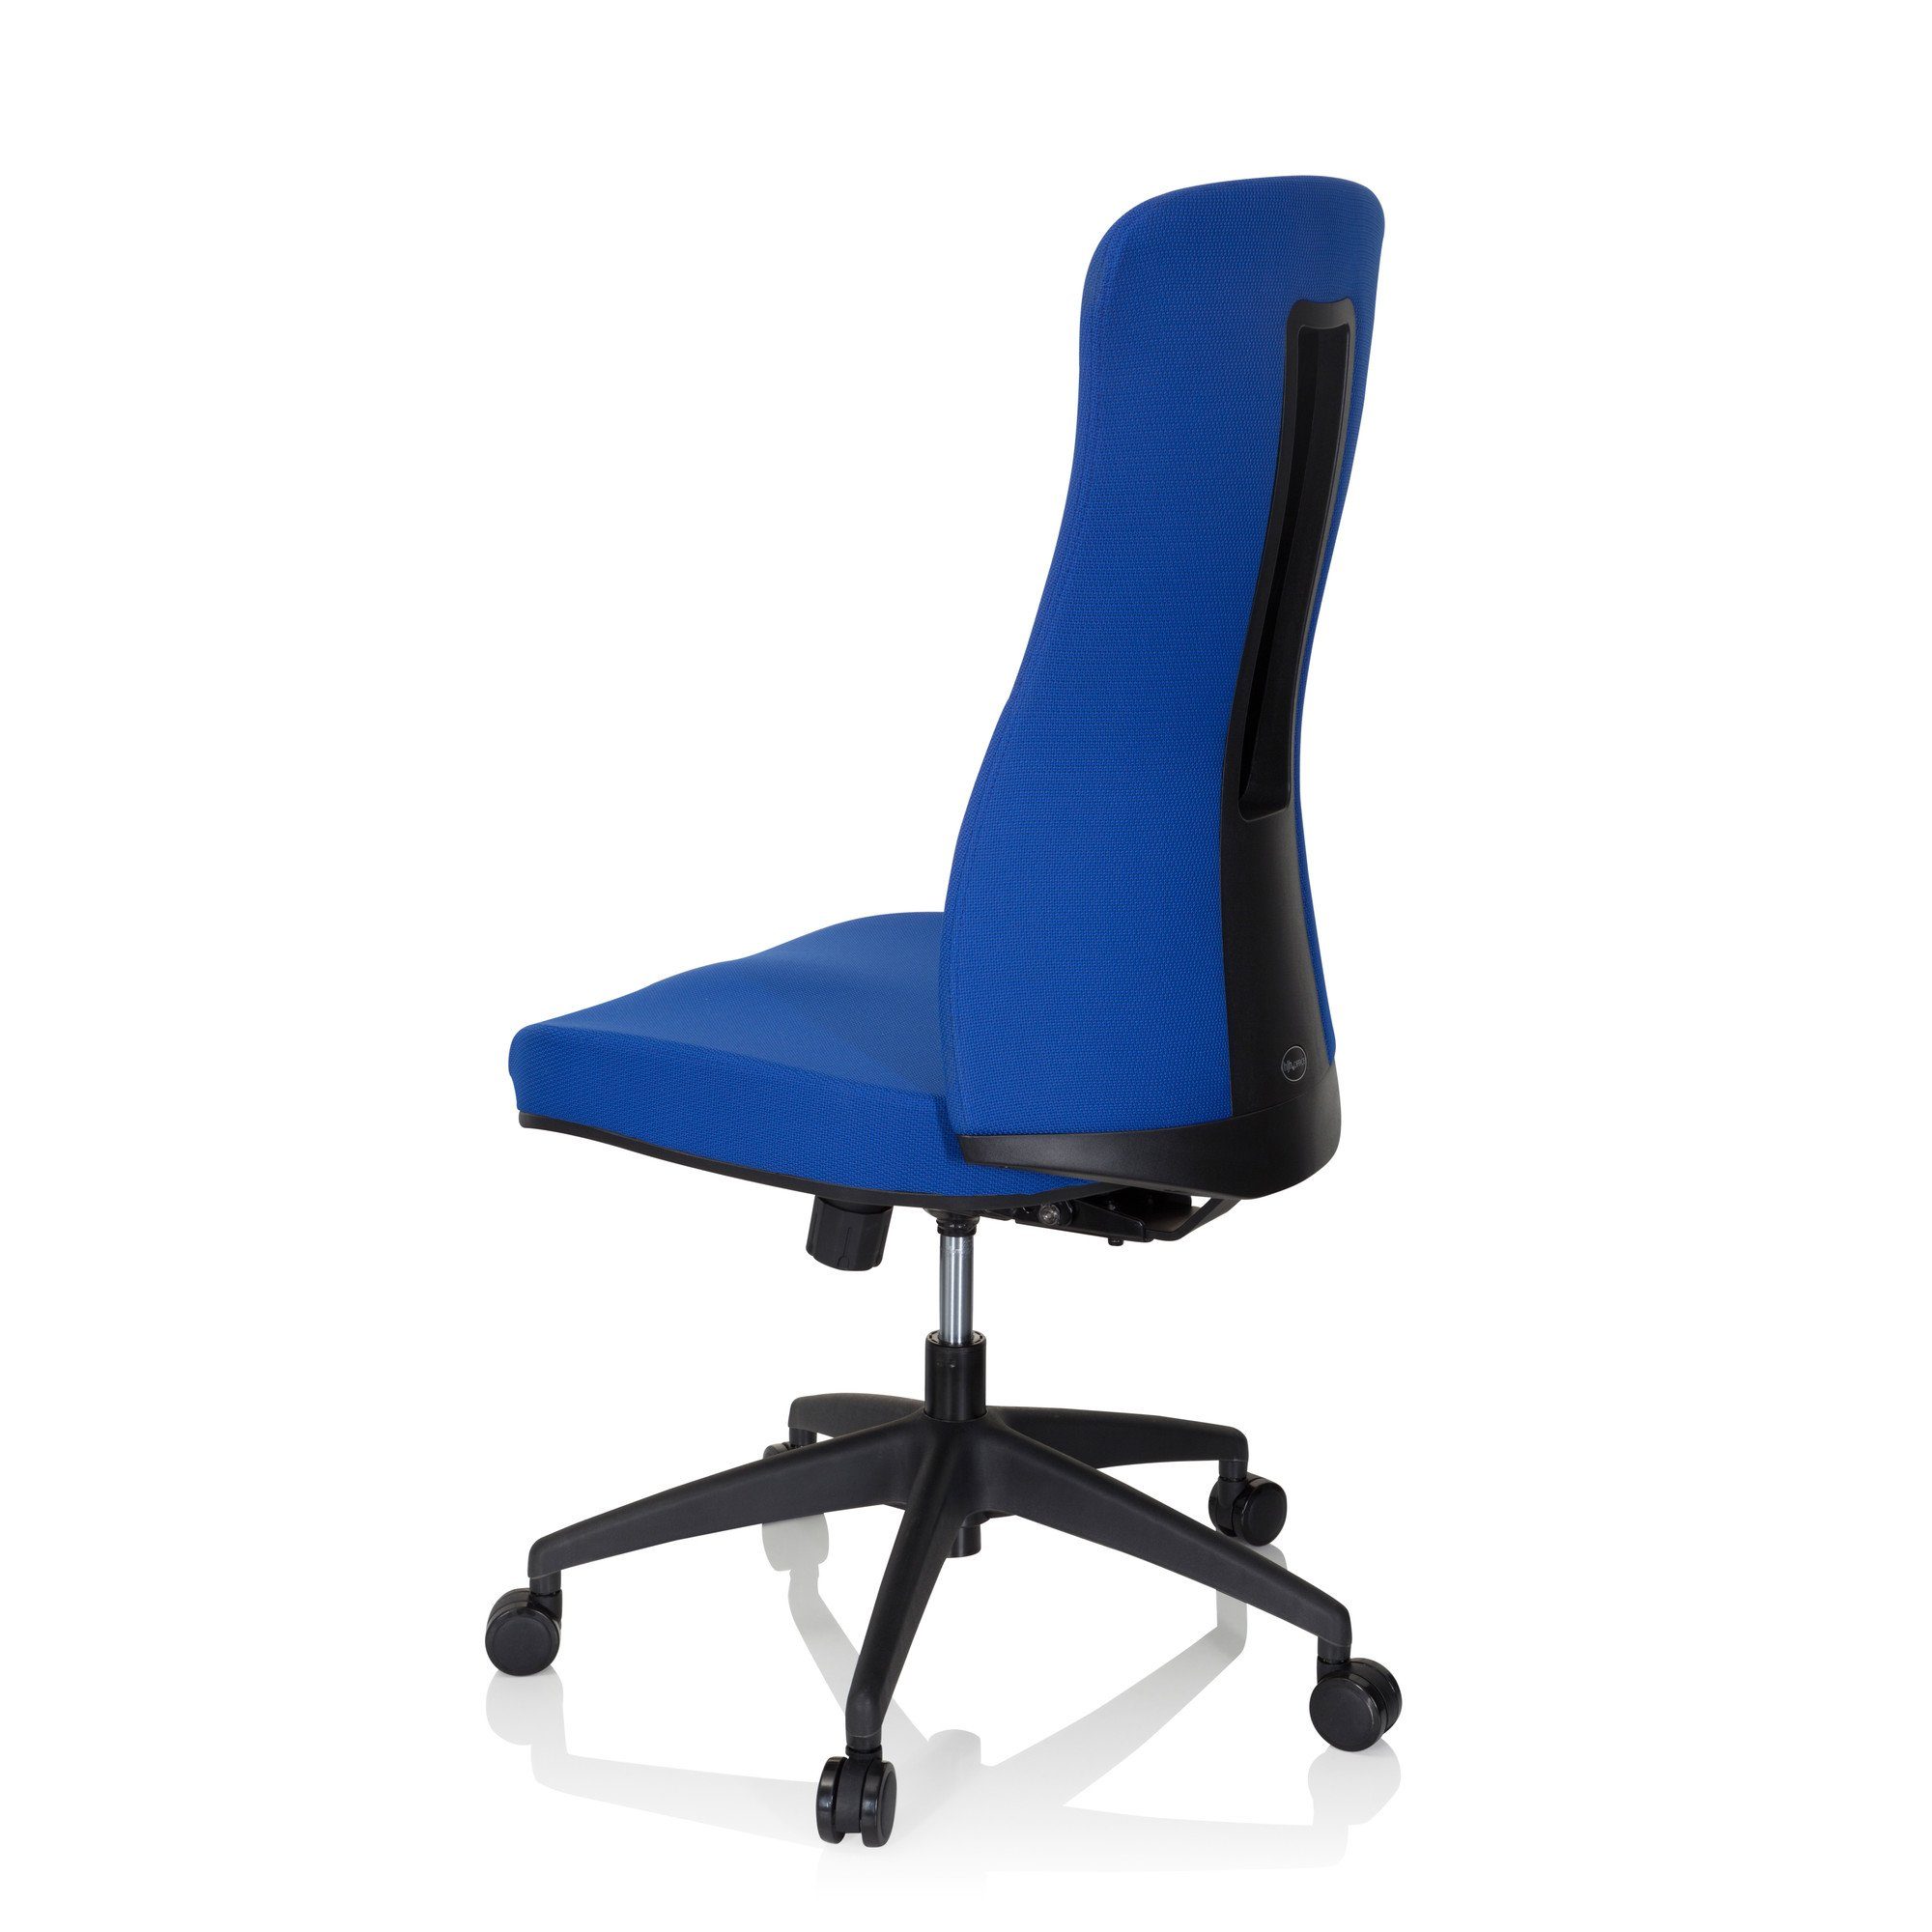 XT Blau OFFICE Armlehnen hjh (1 ergonomisch Bürostuhl Drehstuhl OFFICE ohne Stoff Schreibtischstuhl St), Profi